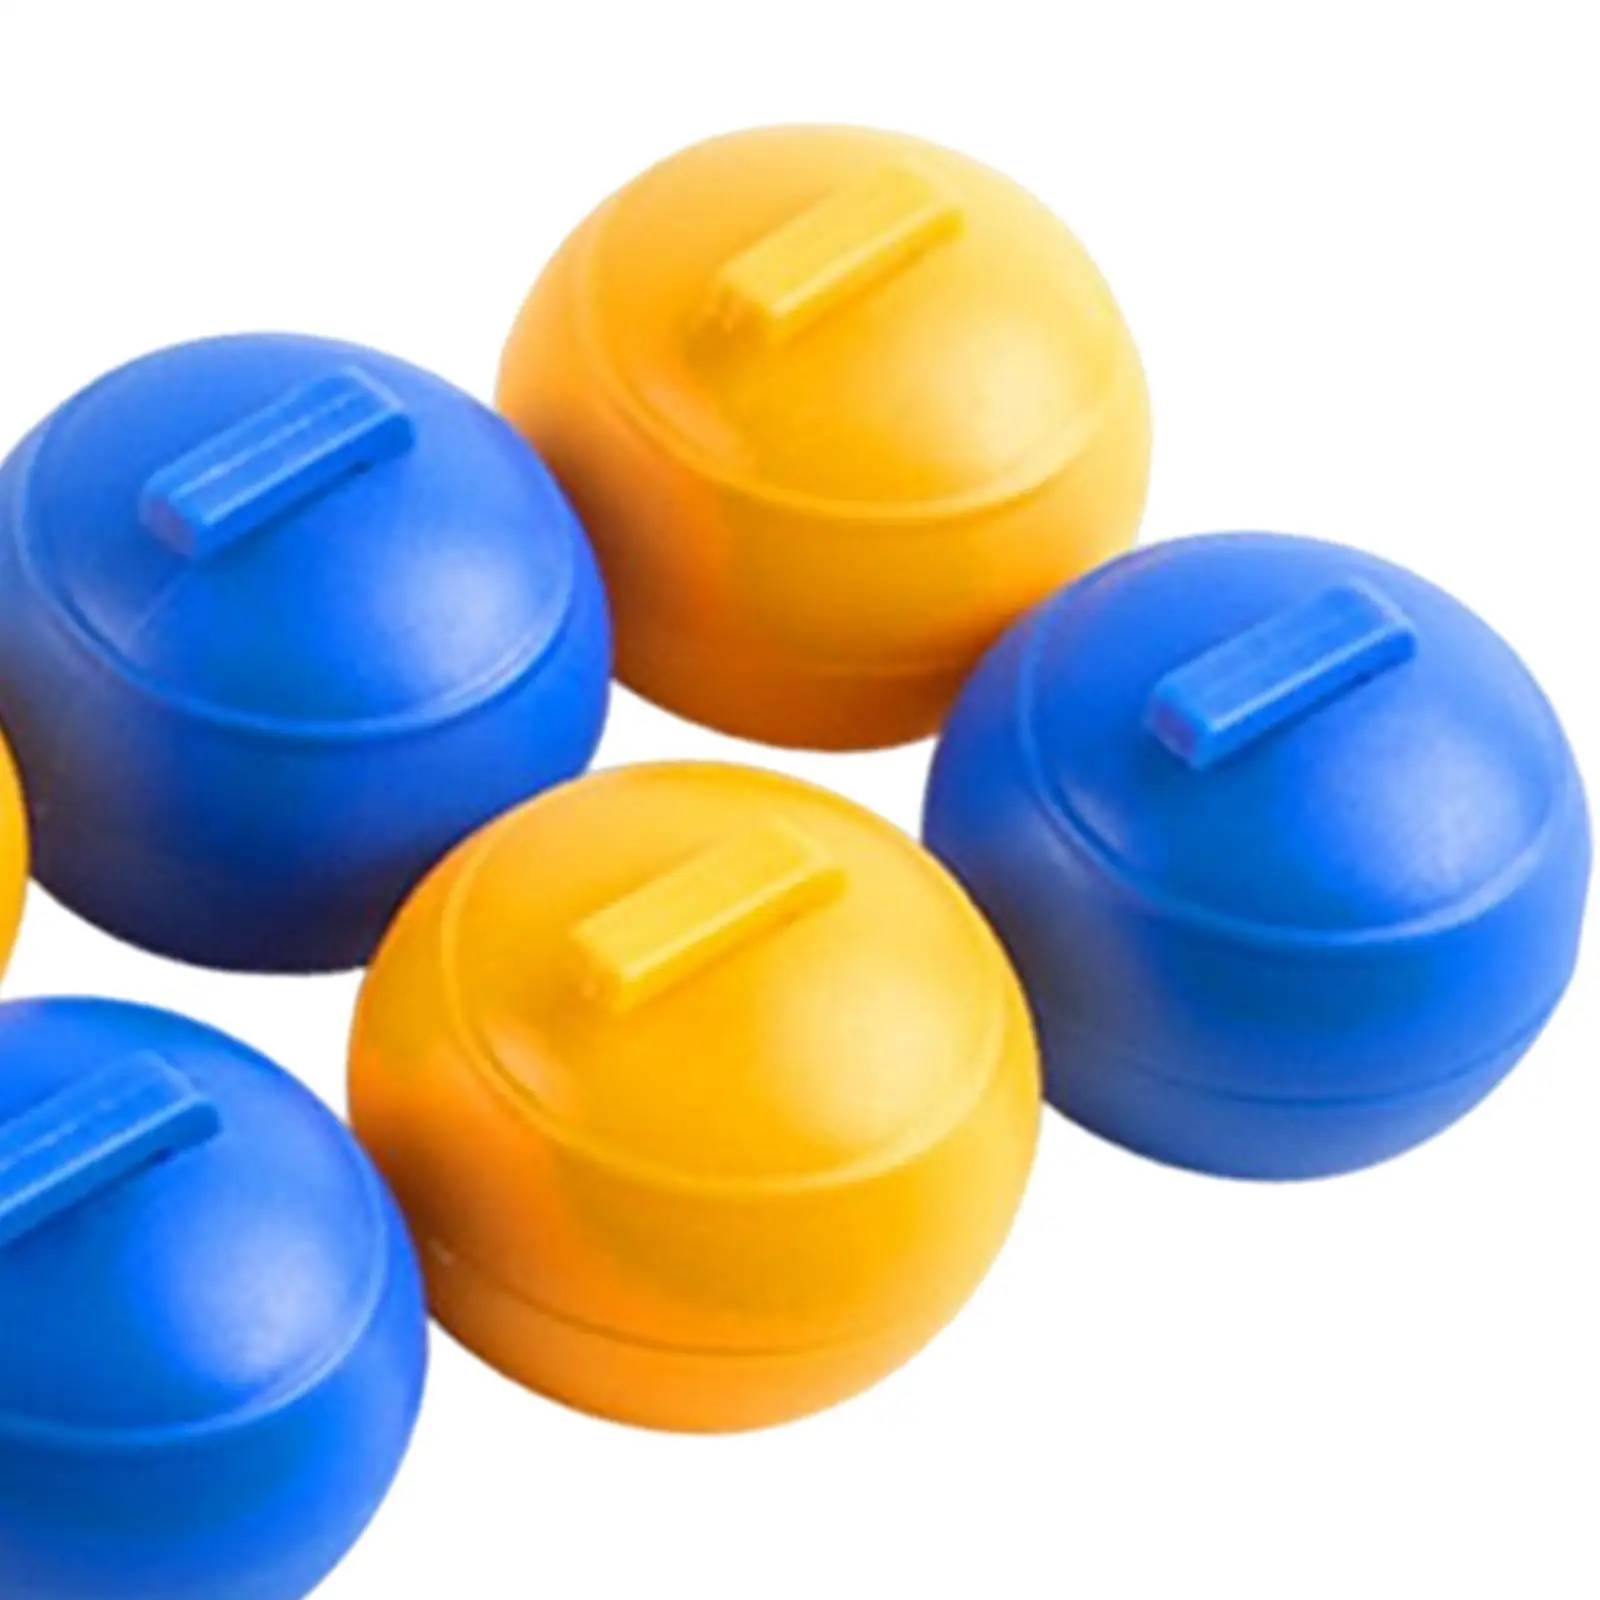 Portable Desktop Curling Ball Toy Game Shuffleboard Educational Toy Sports